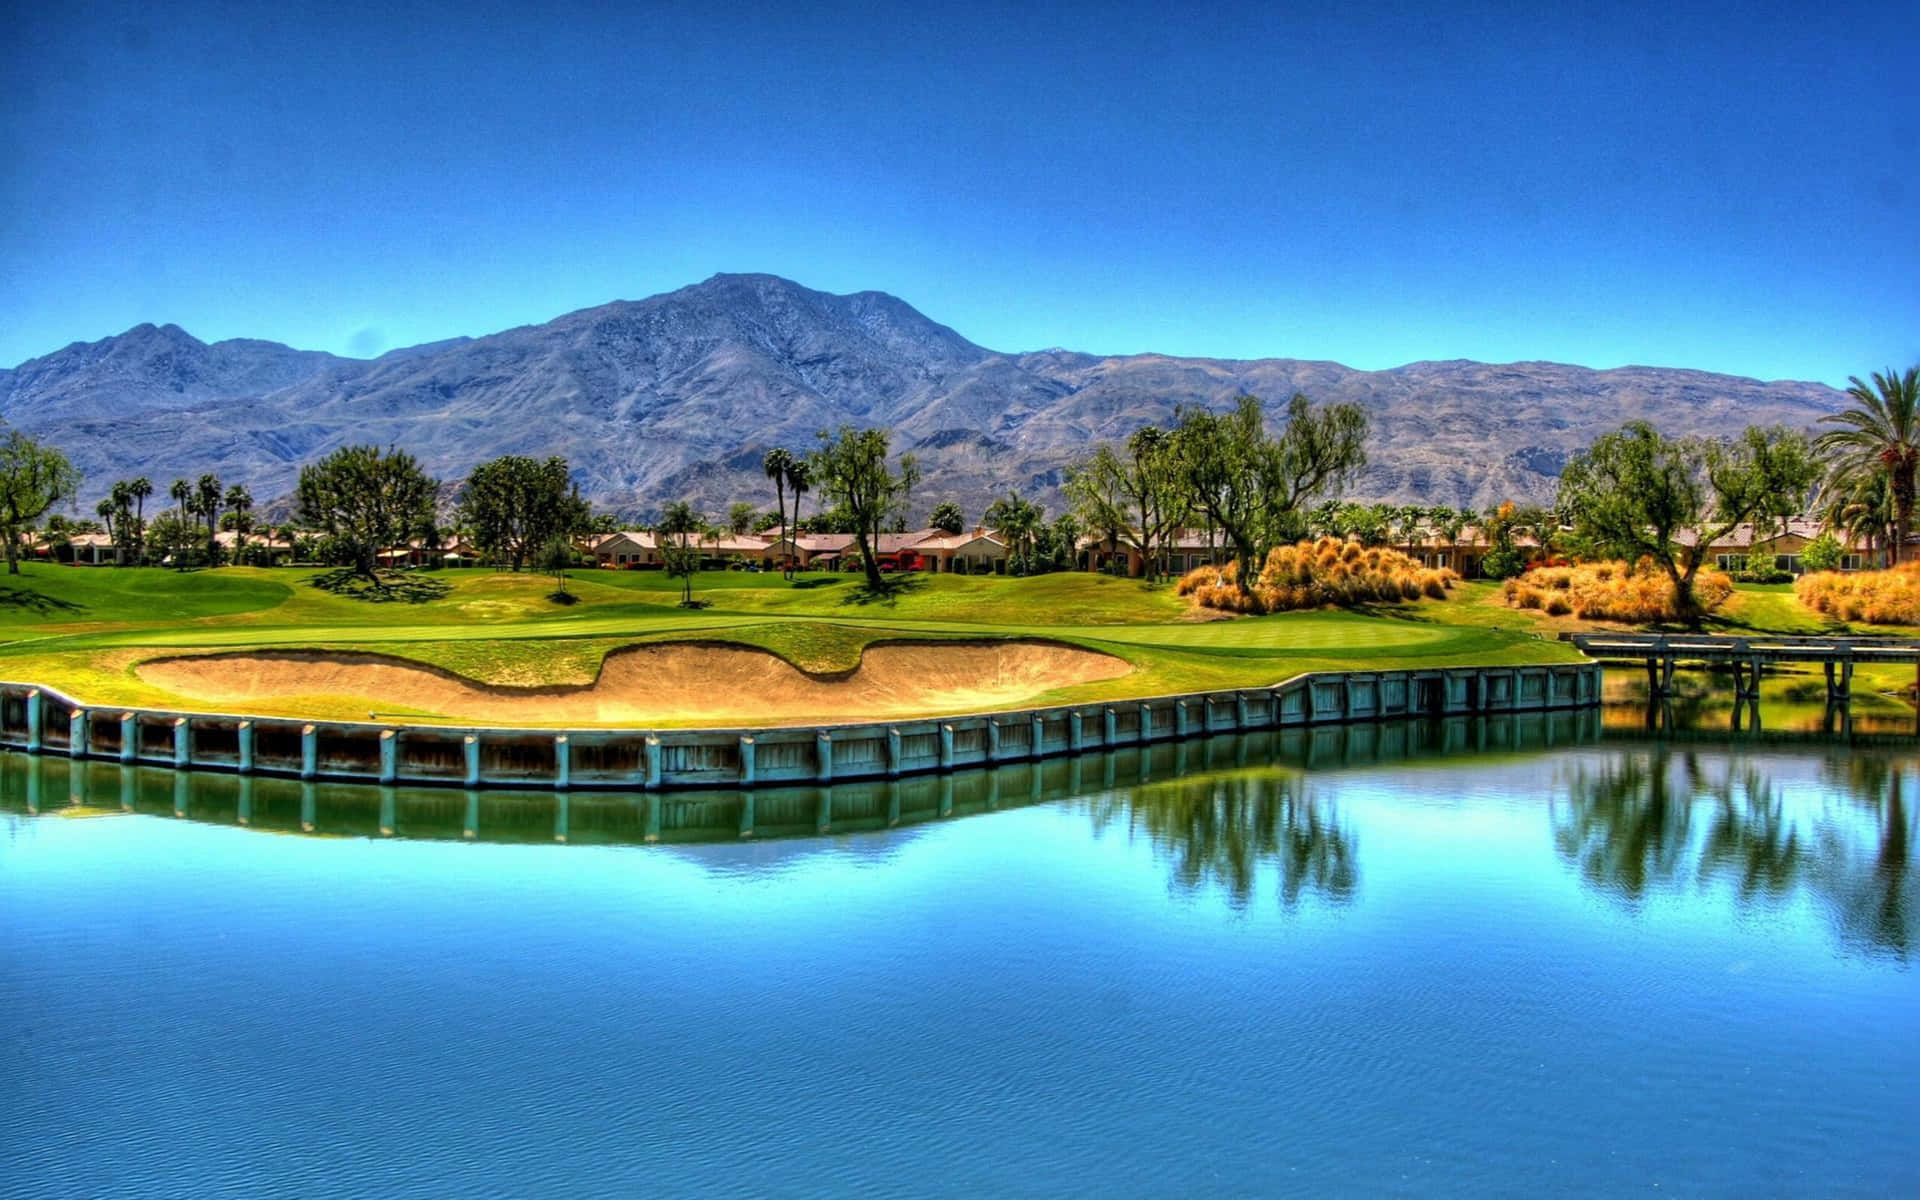 Stunning 4K Golf Course Landscape